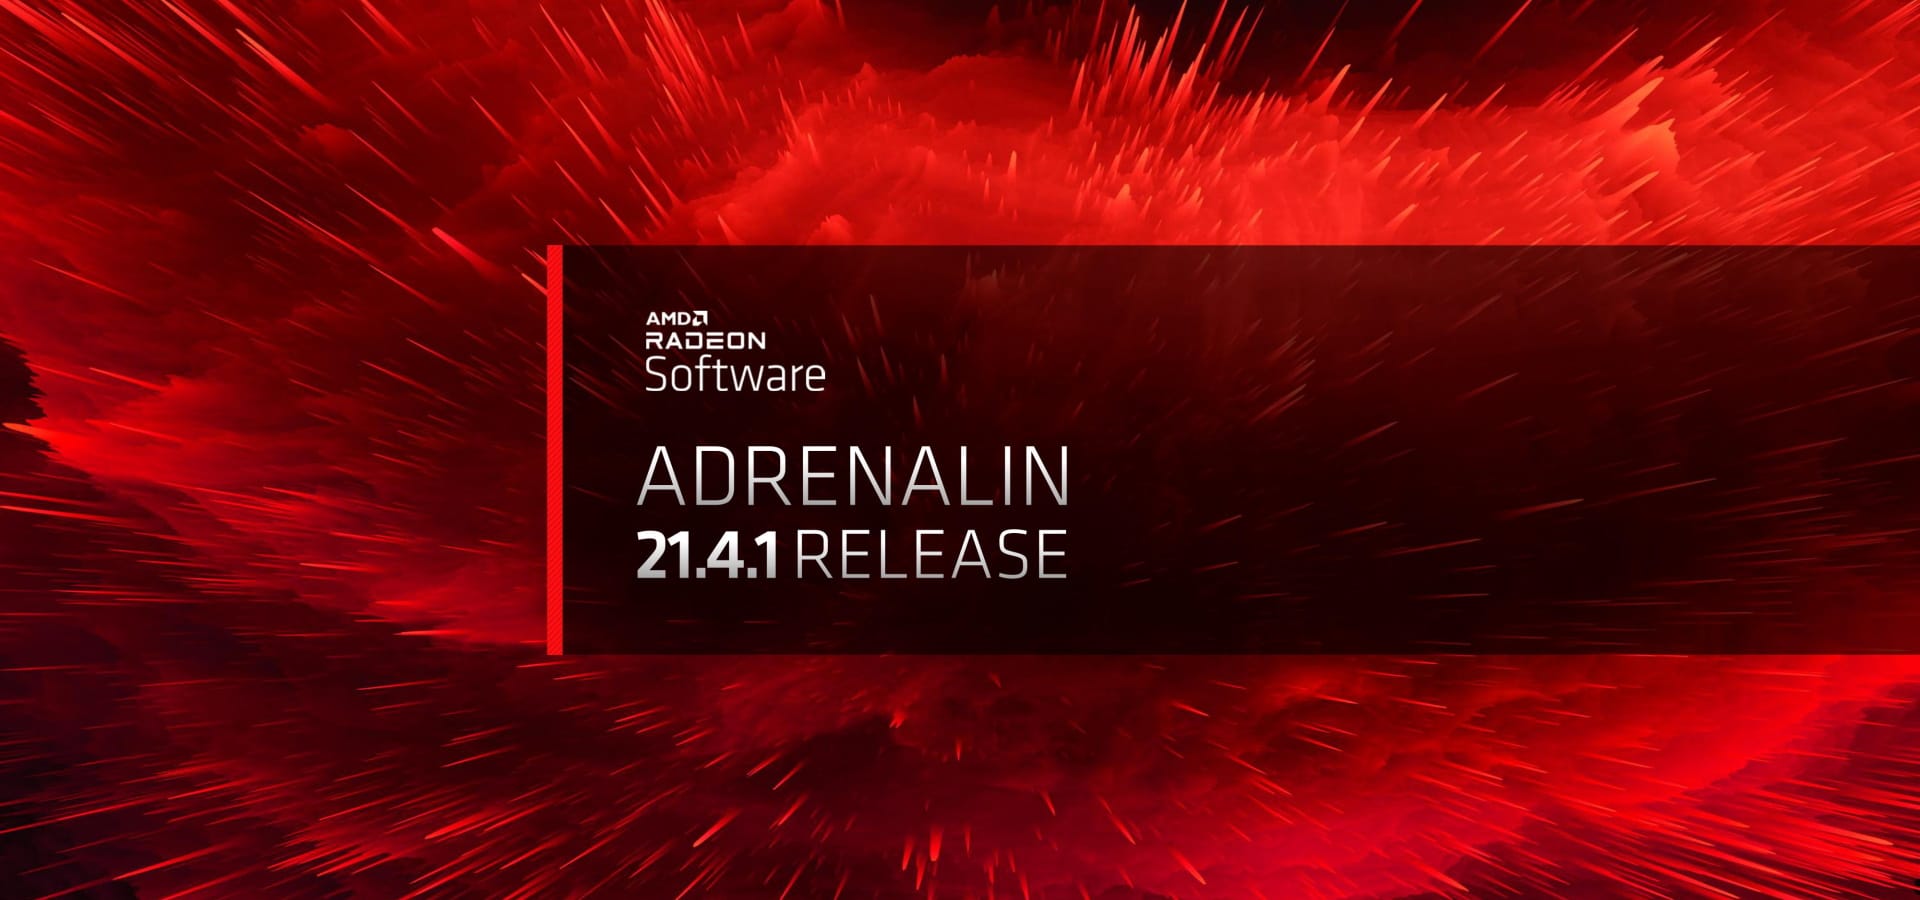 Nuevo AMD Adrenalin Driver 21.5.2 está optimizado para Days Gone